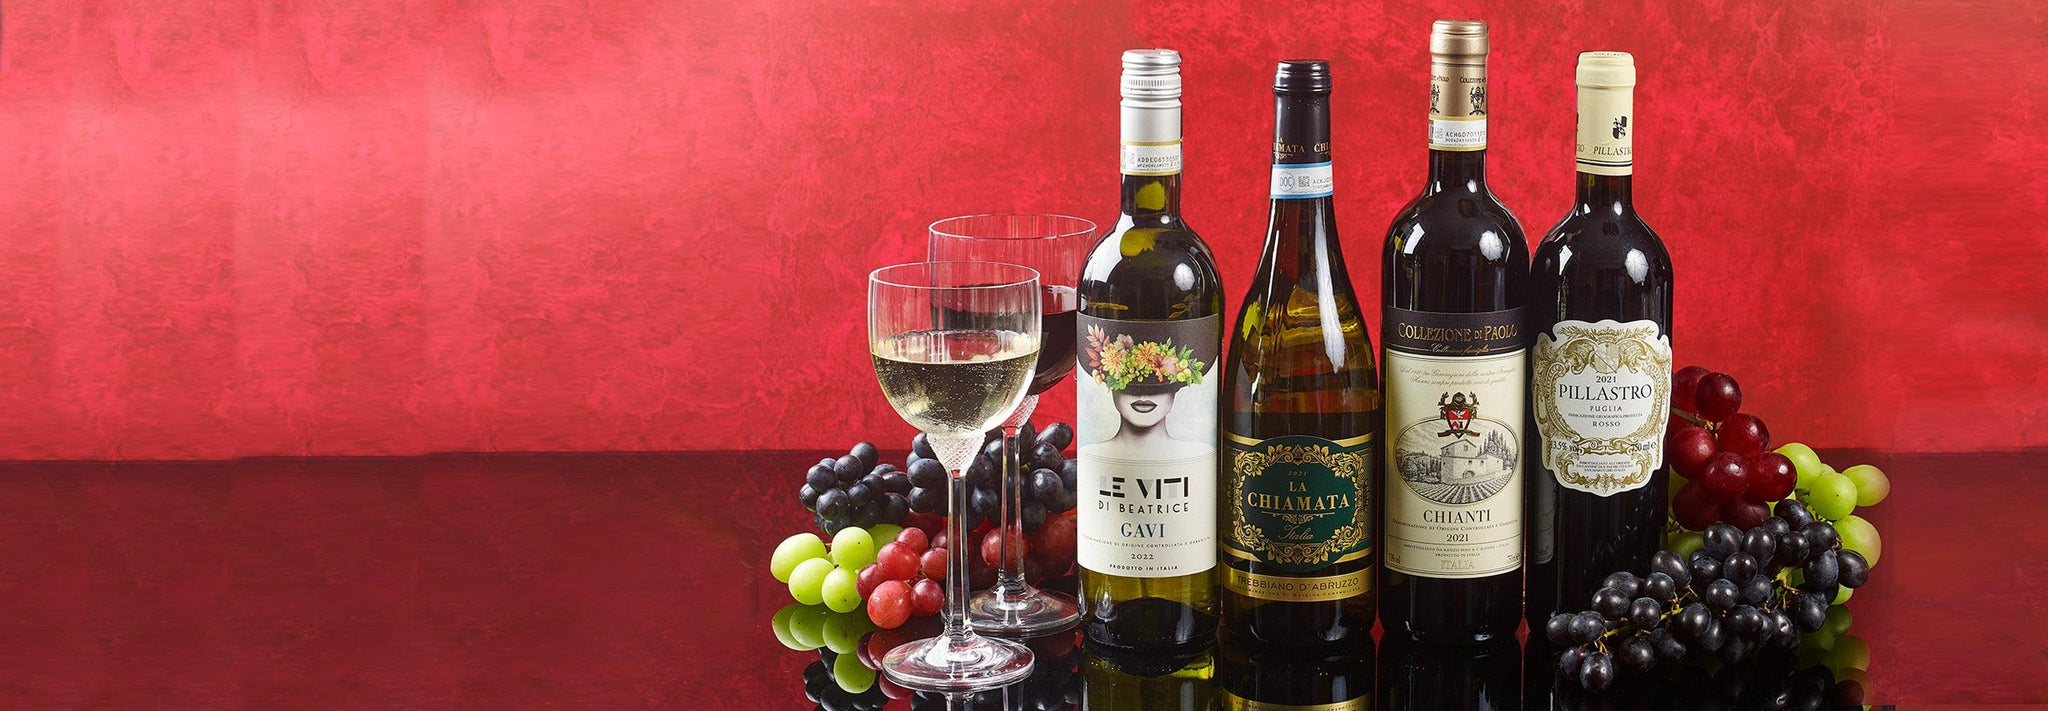 Italian Wine and Prosecco - Sacla'